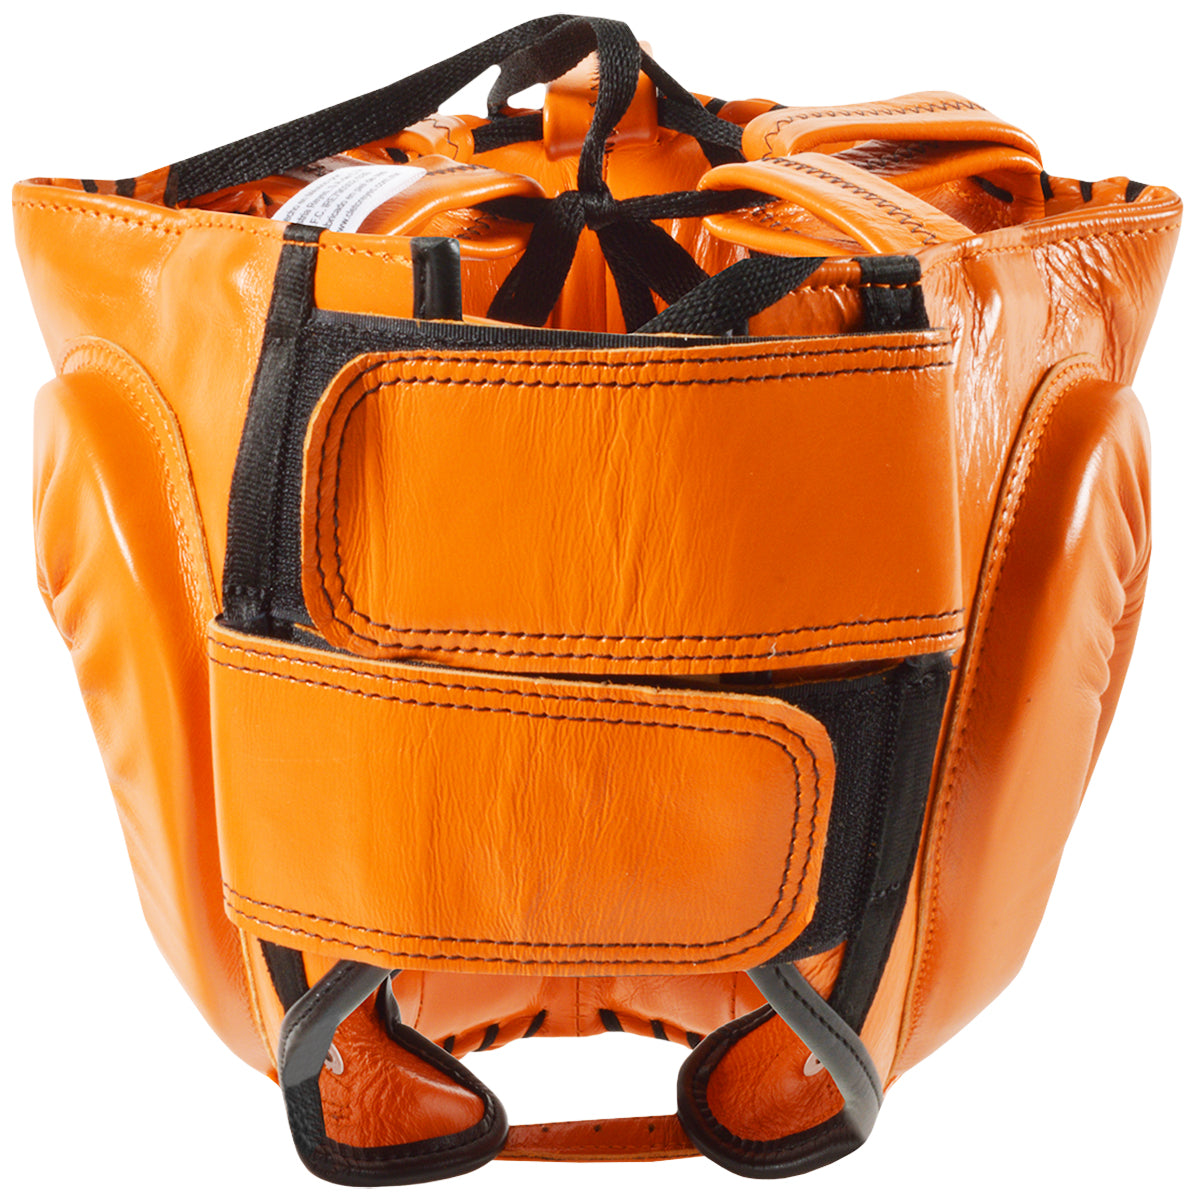 Cleto Reyes Traditional Leather Boxing Headgear w/ Nylon Face Bar - Tiger Orange Cleto Reyes